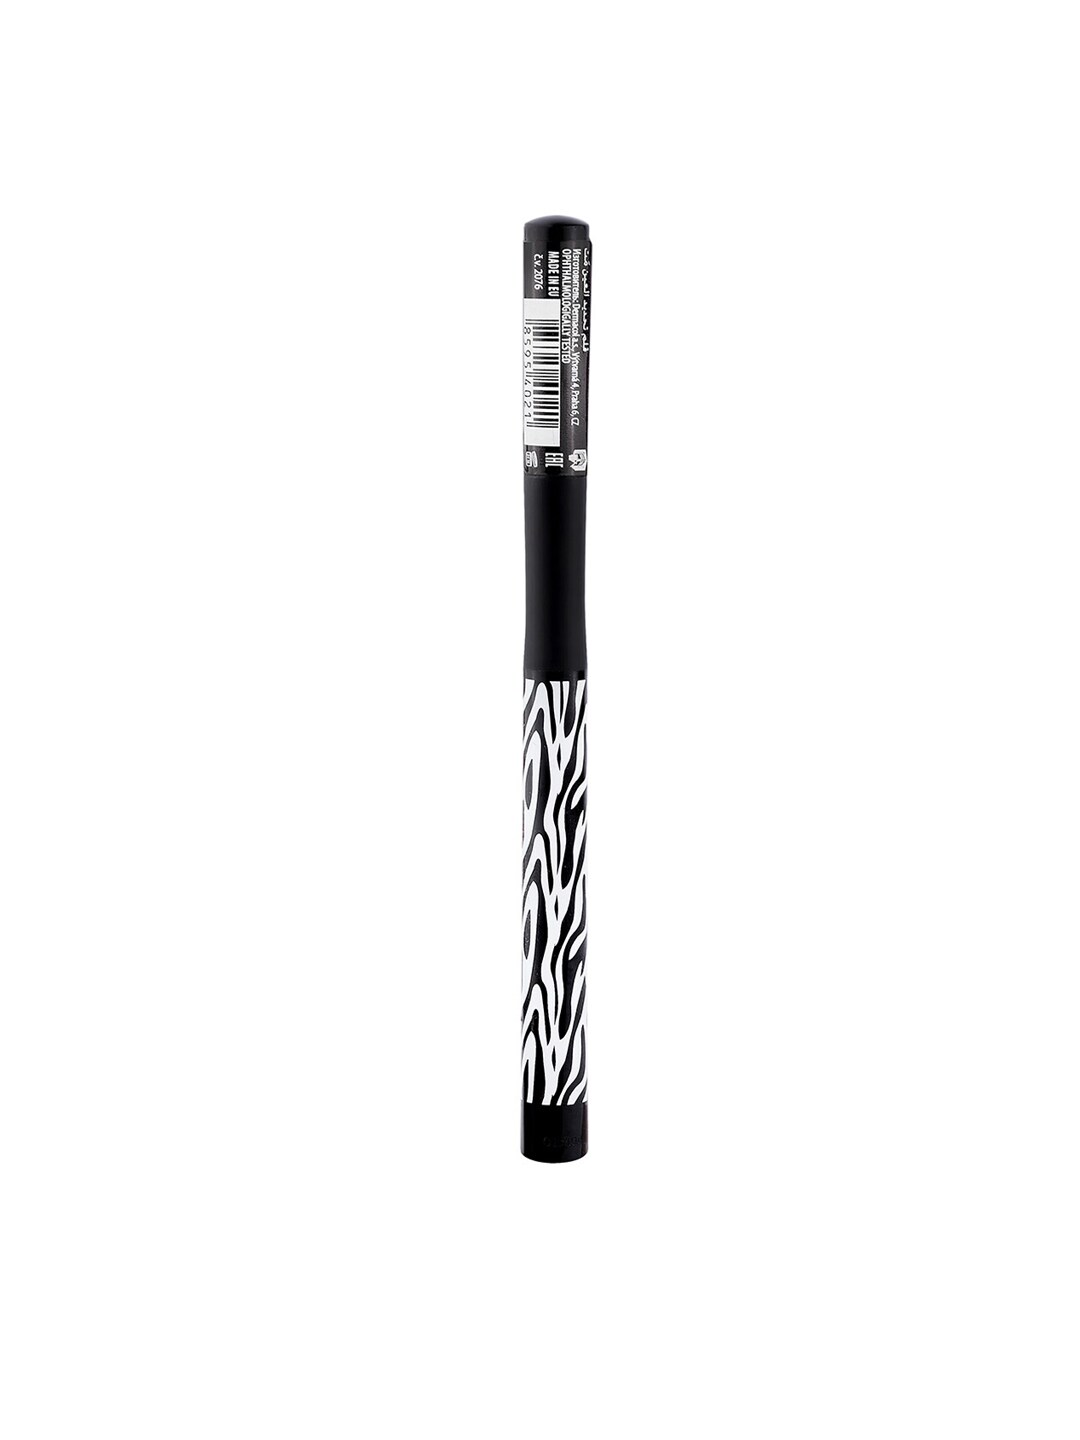 Dermacol 2076 Matt Black Eye Pencil 4.3 g Price in India